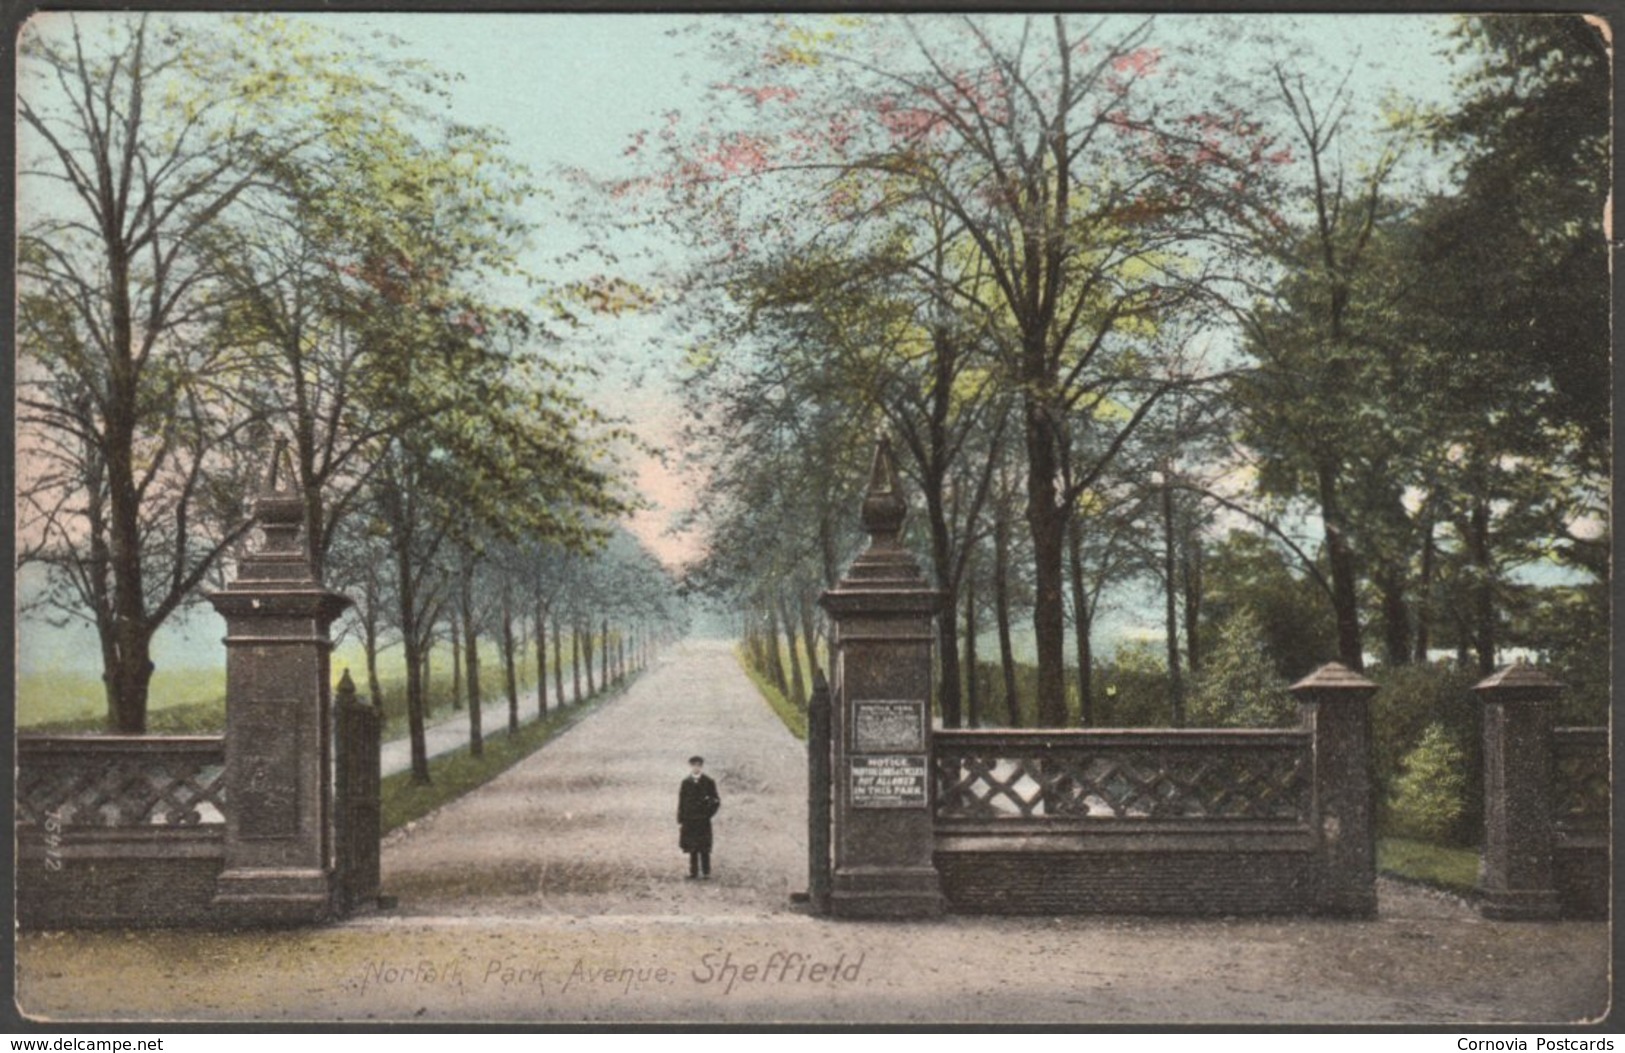 Norfolk Park Avenue, Sheffield, Yorkshire, C.1905-10 - Wrench Postcard - Sheffield